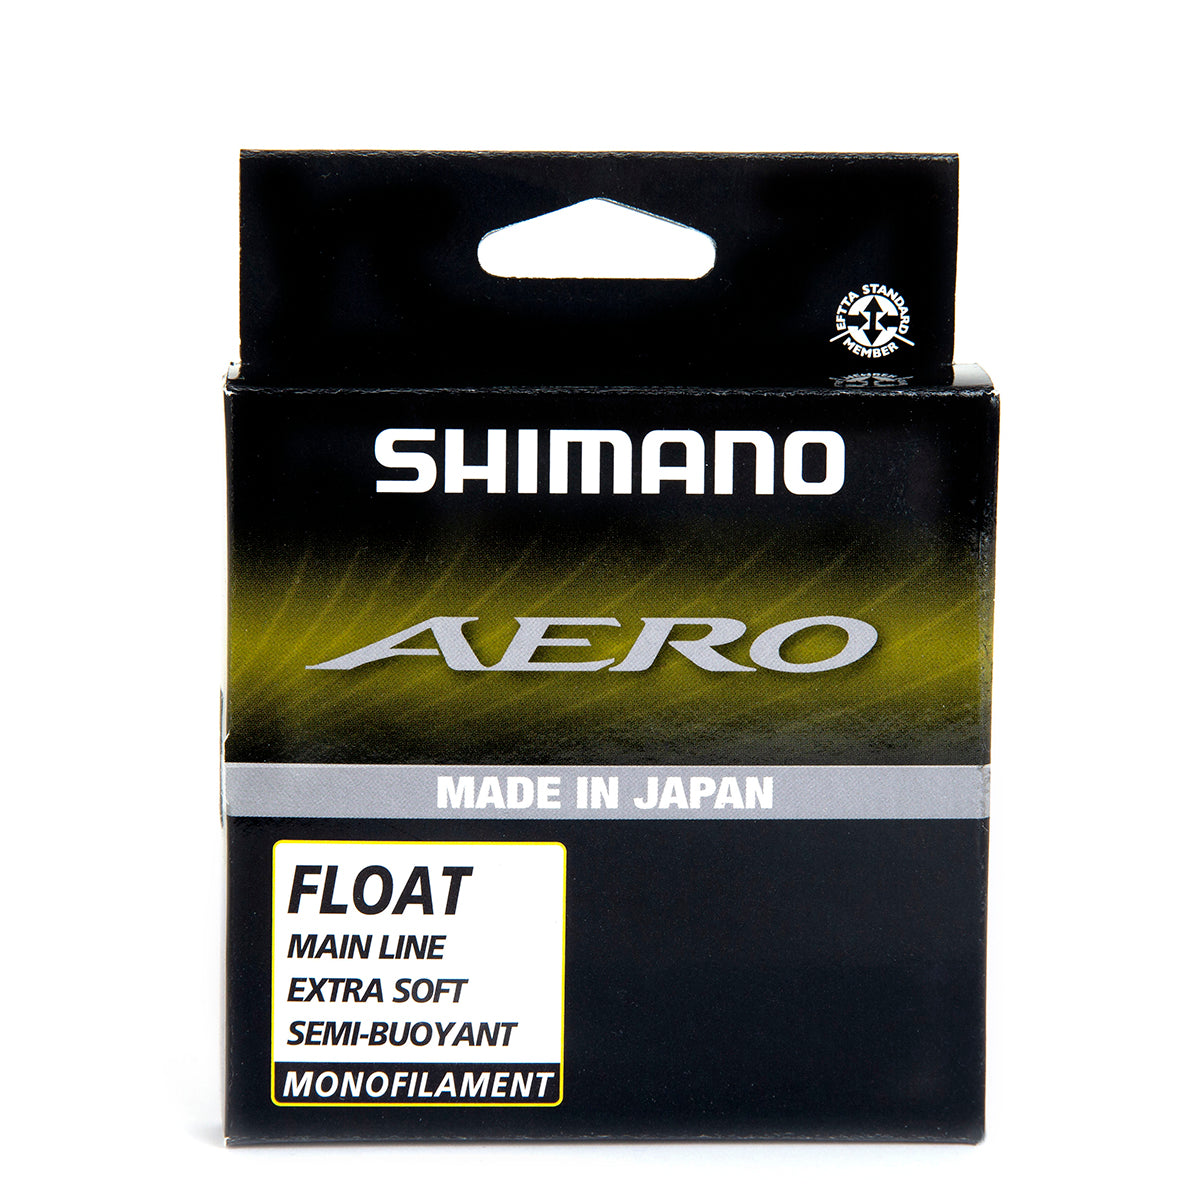 Shimano Aero Float line